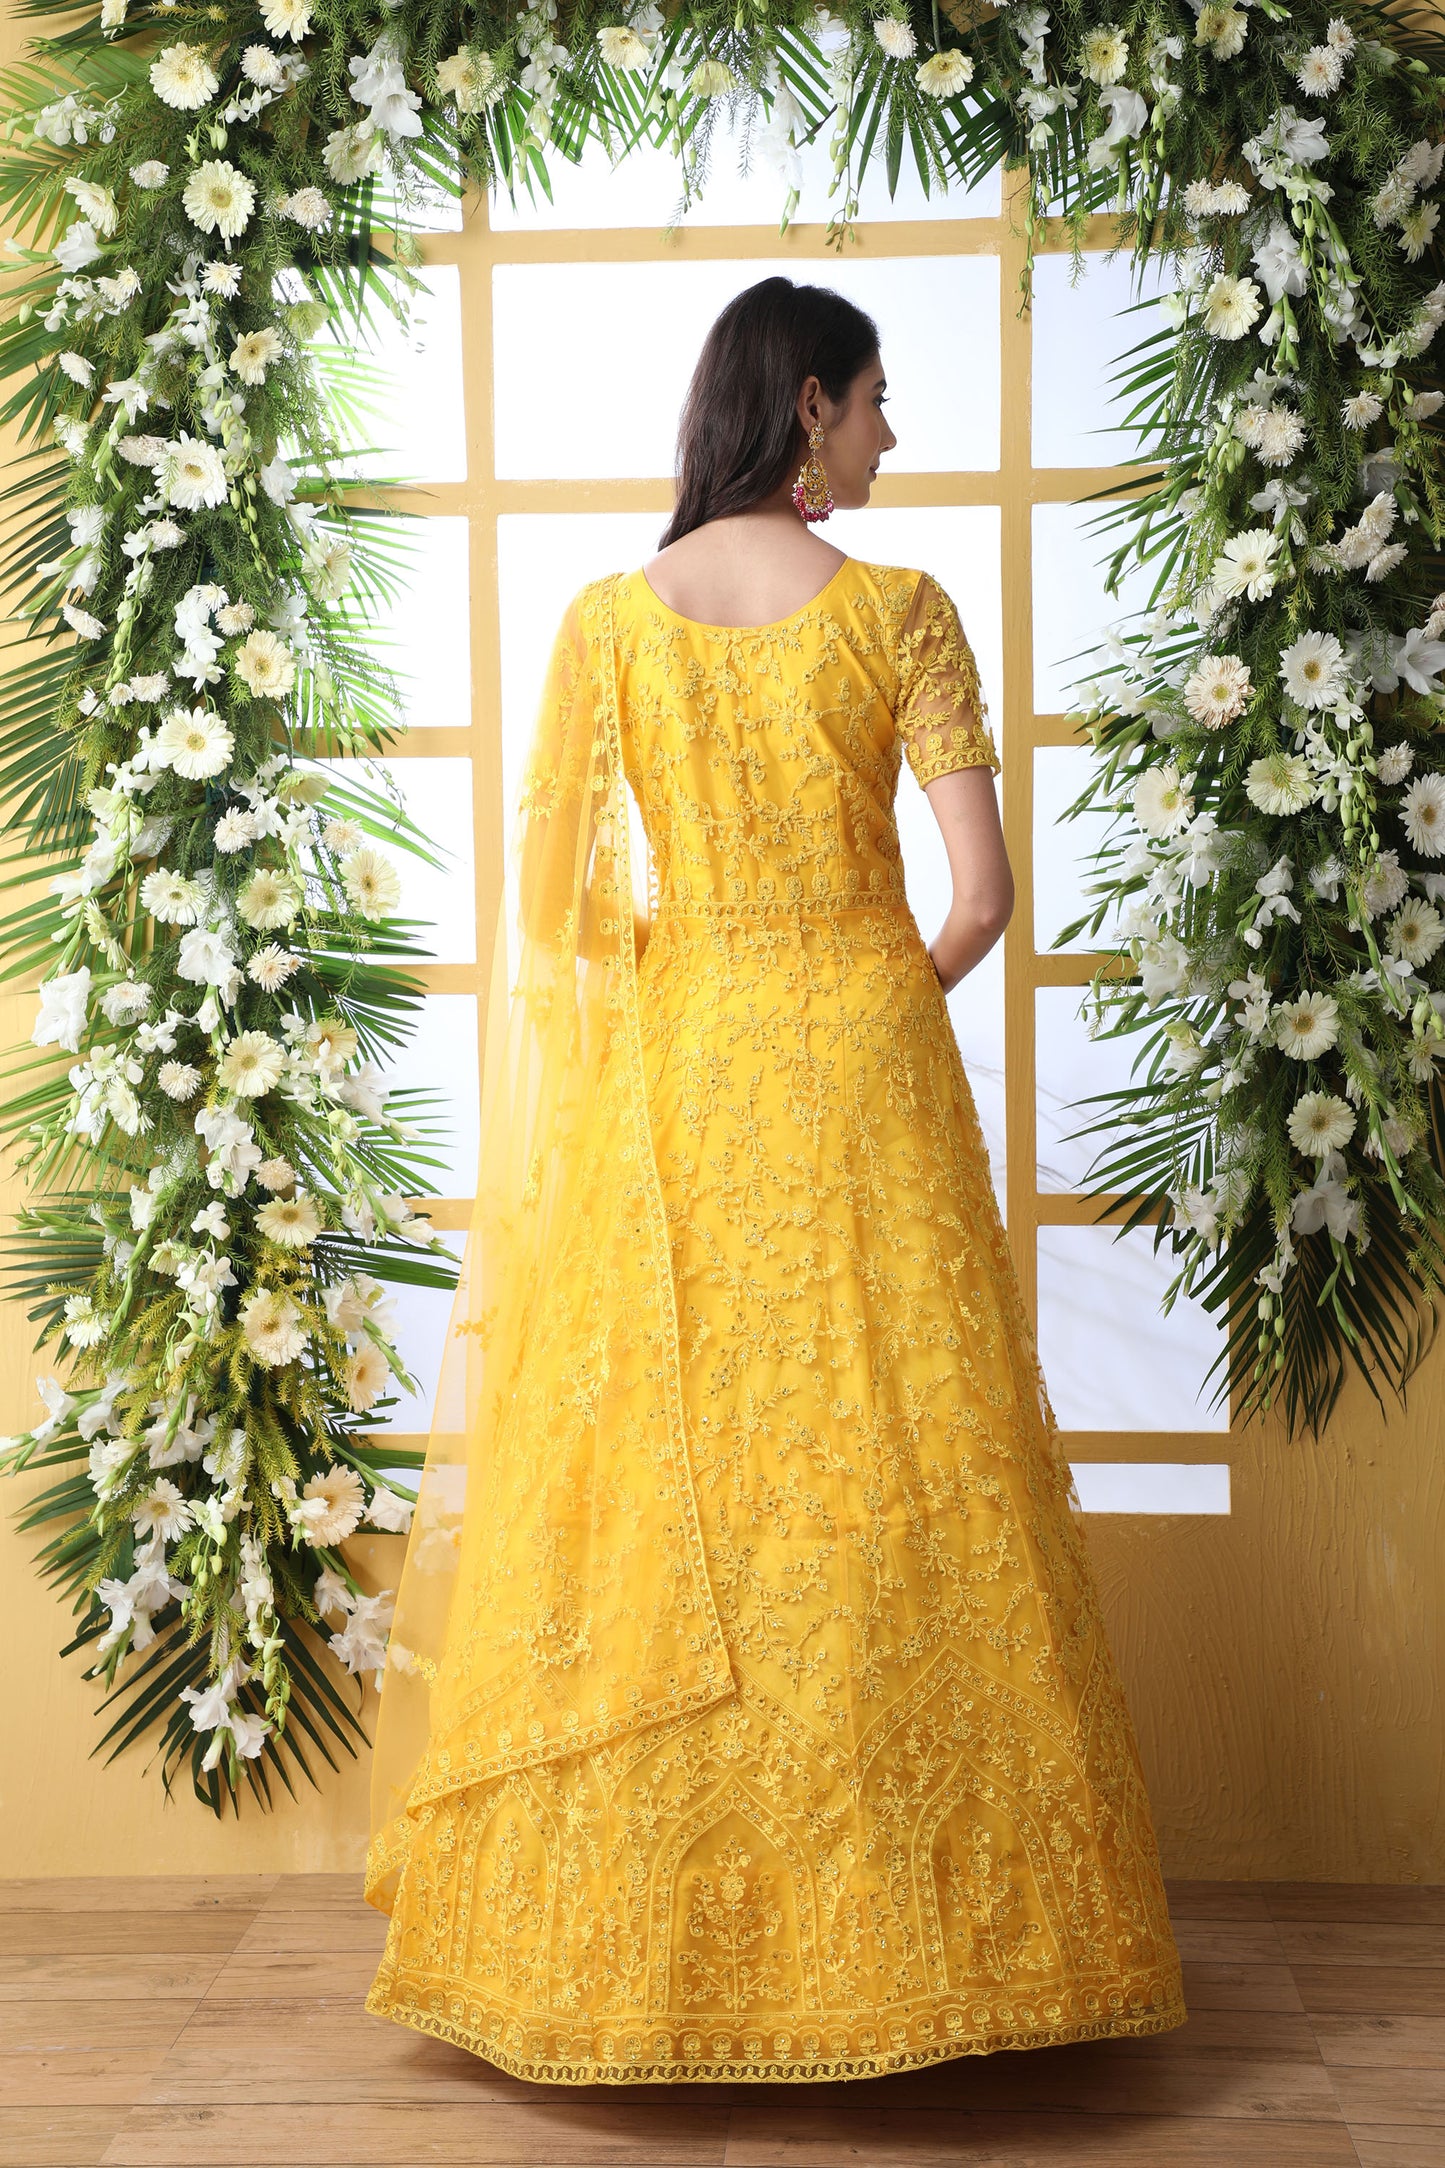 Stunning Yellow Color Net Anarkali for Haldi